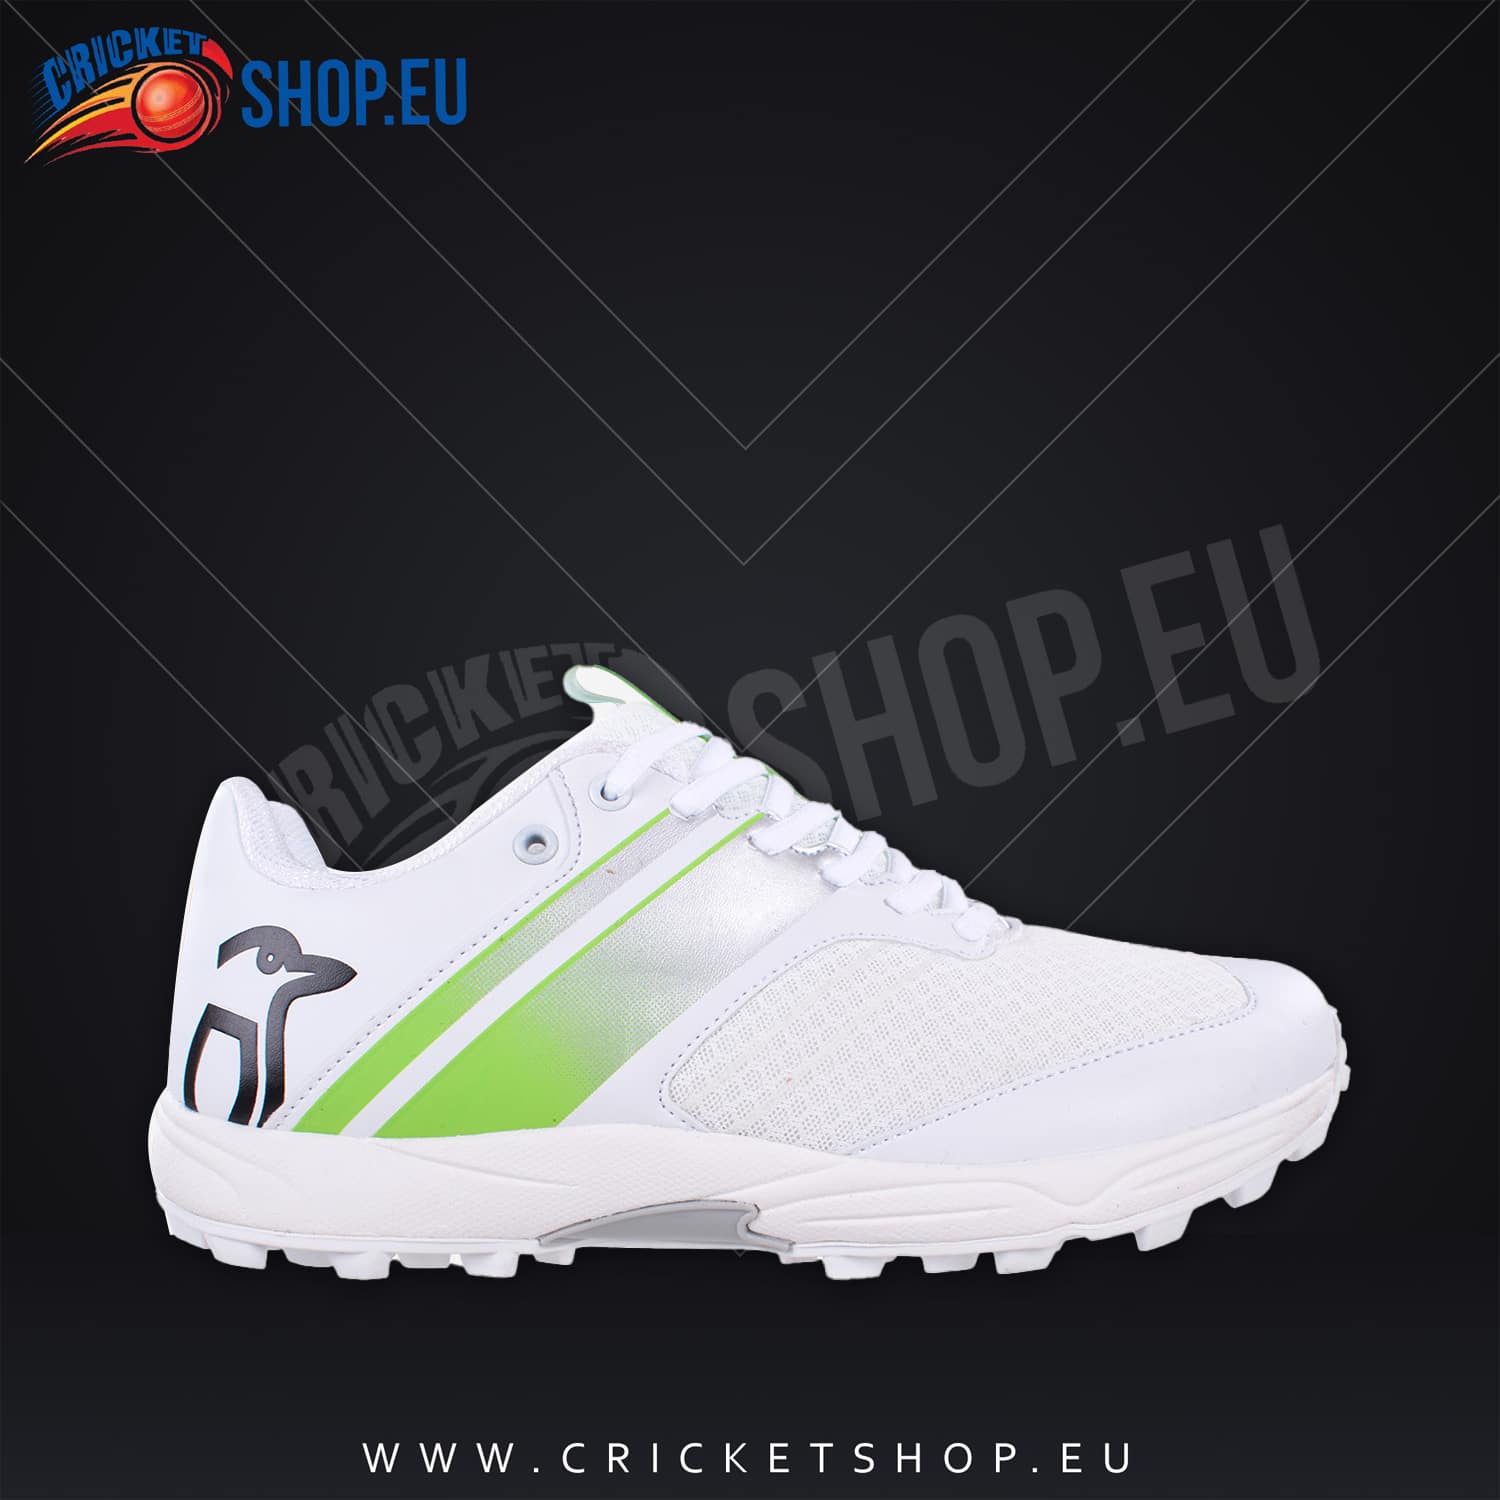 Kookaburra KC 3.0 Rubber Sole Cricket Shoes White/Lime